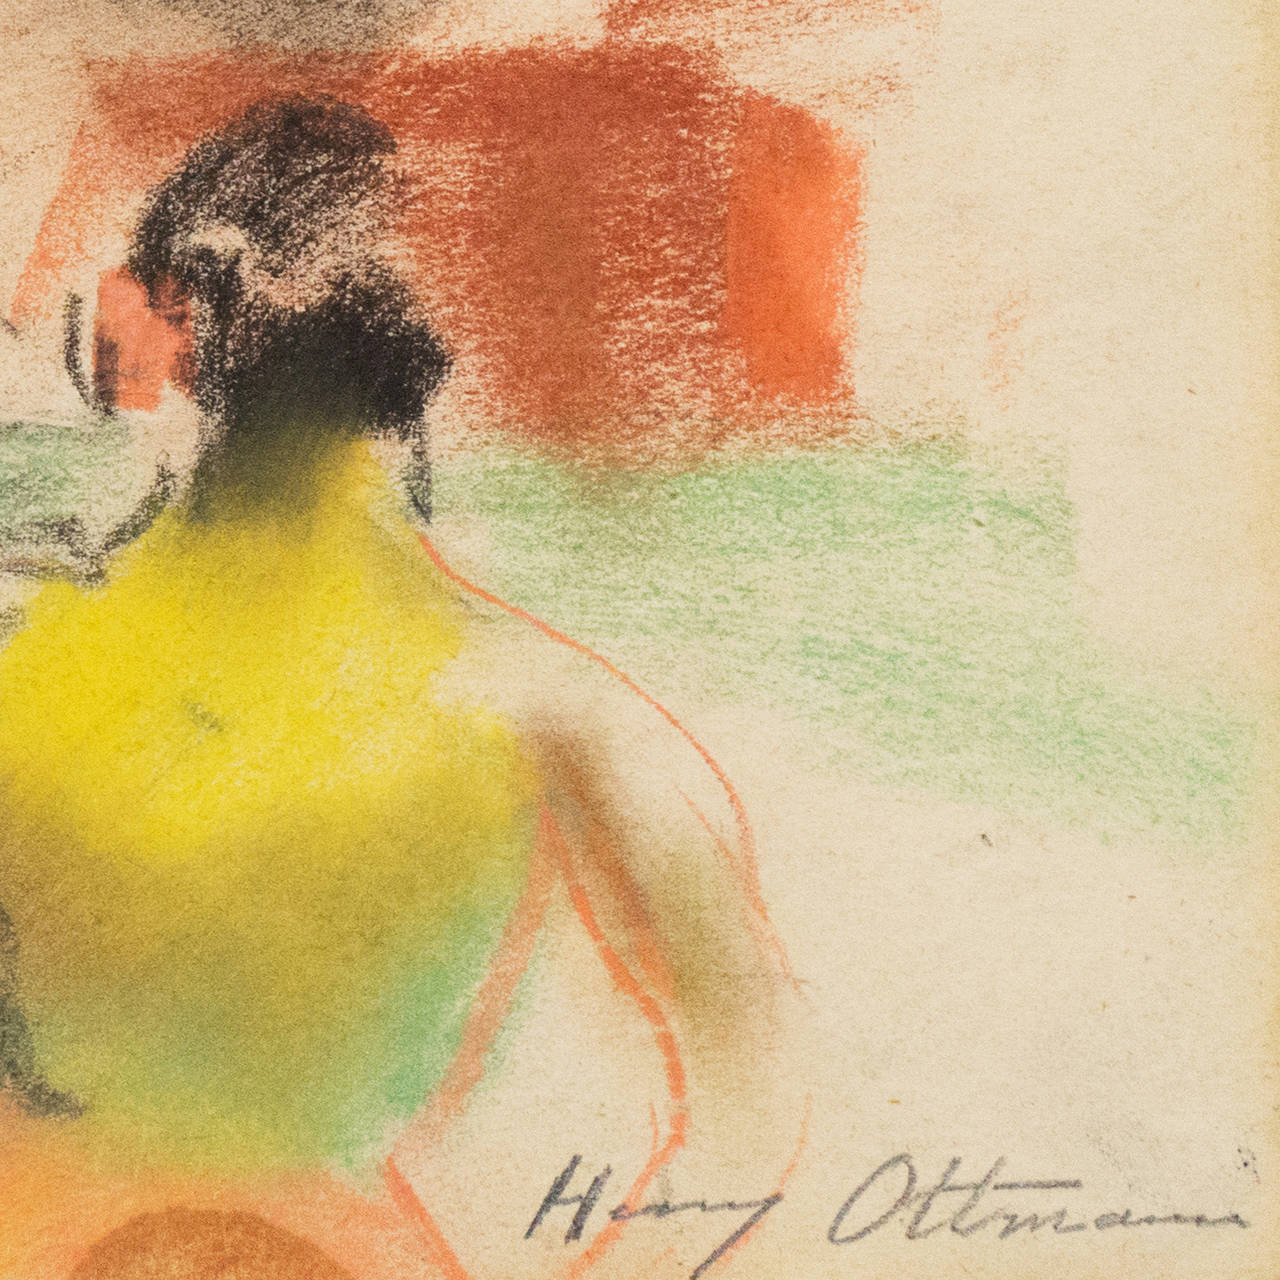 Under the Big Top - Post-Impressionist Art by Henri Ottmann